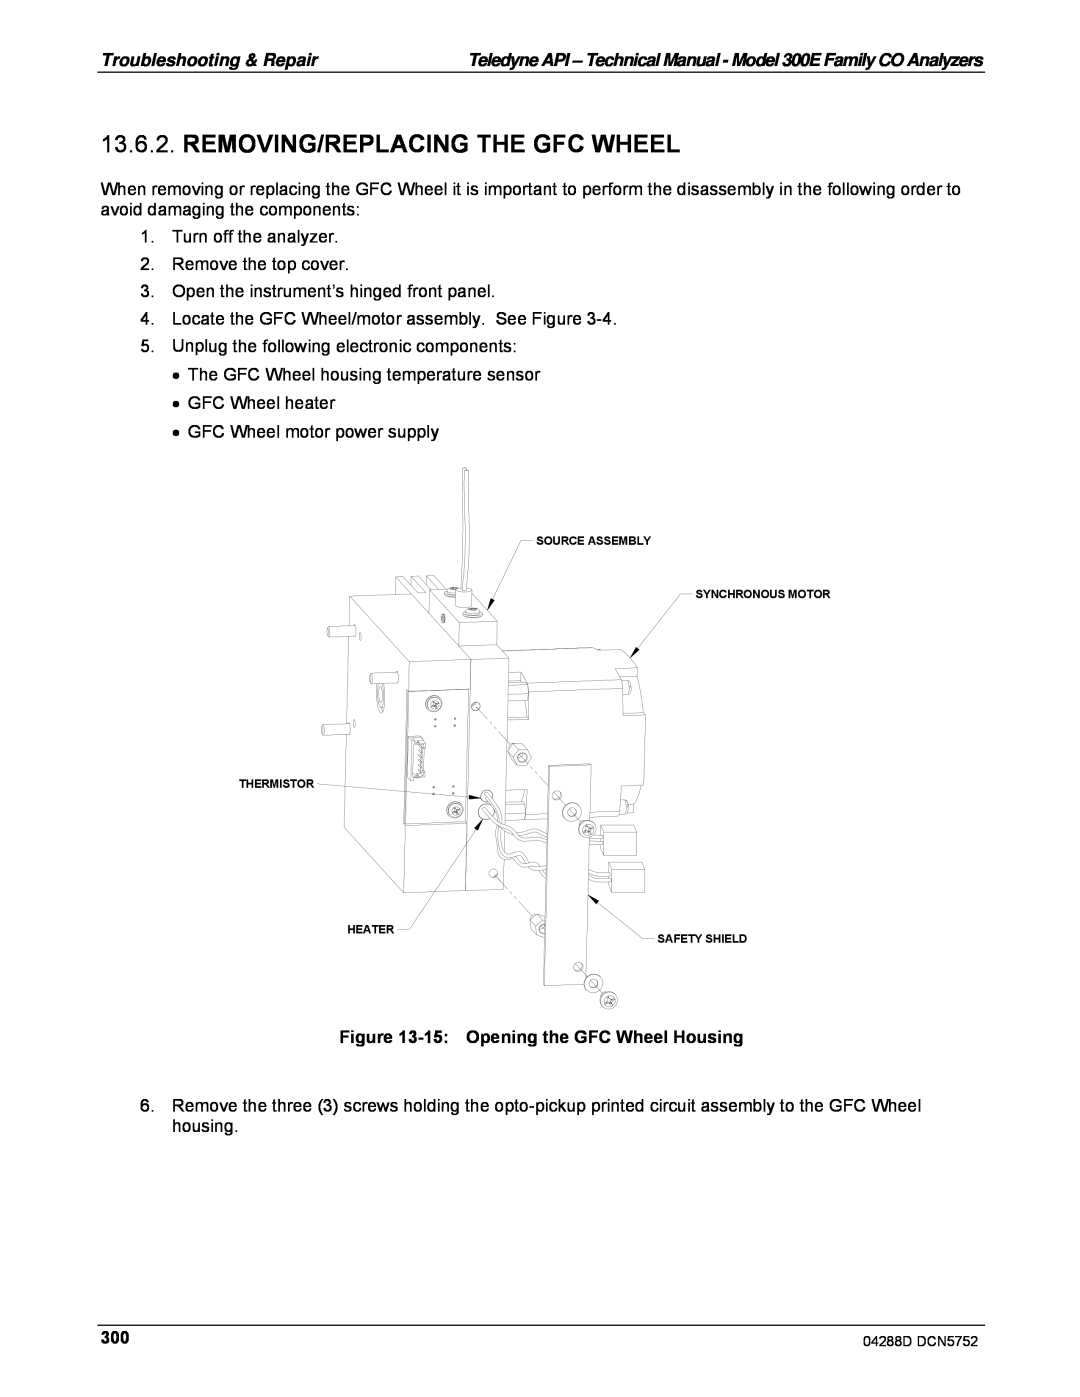 Teledyne M300EM operation manual Removing/Replacing The Gfc Wheel, 15:Opening the GFC Wheel Housing 